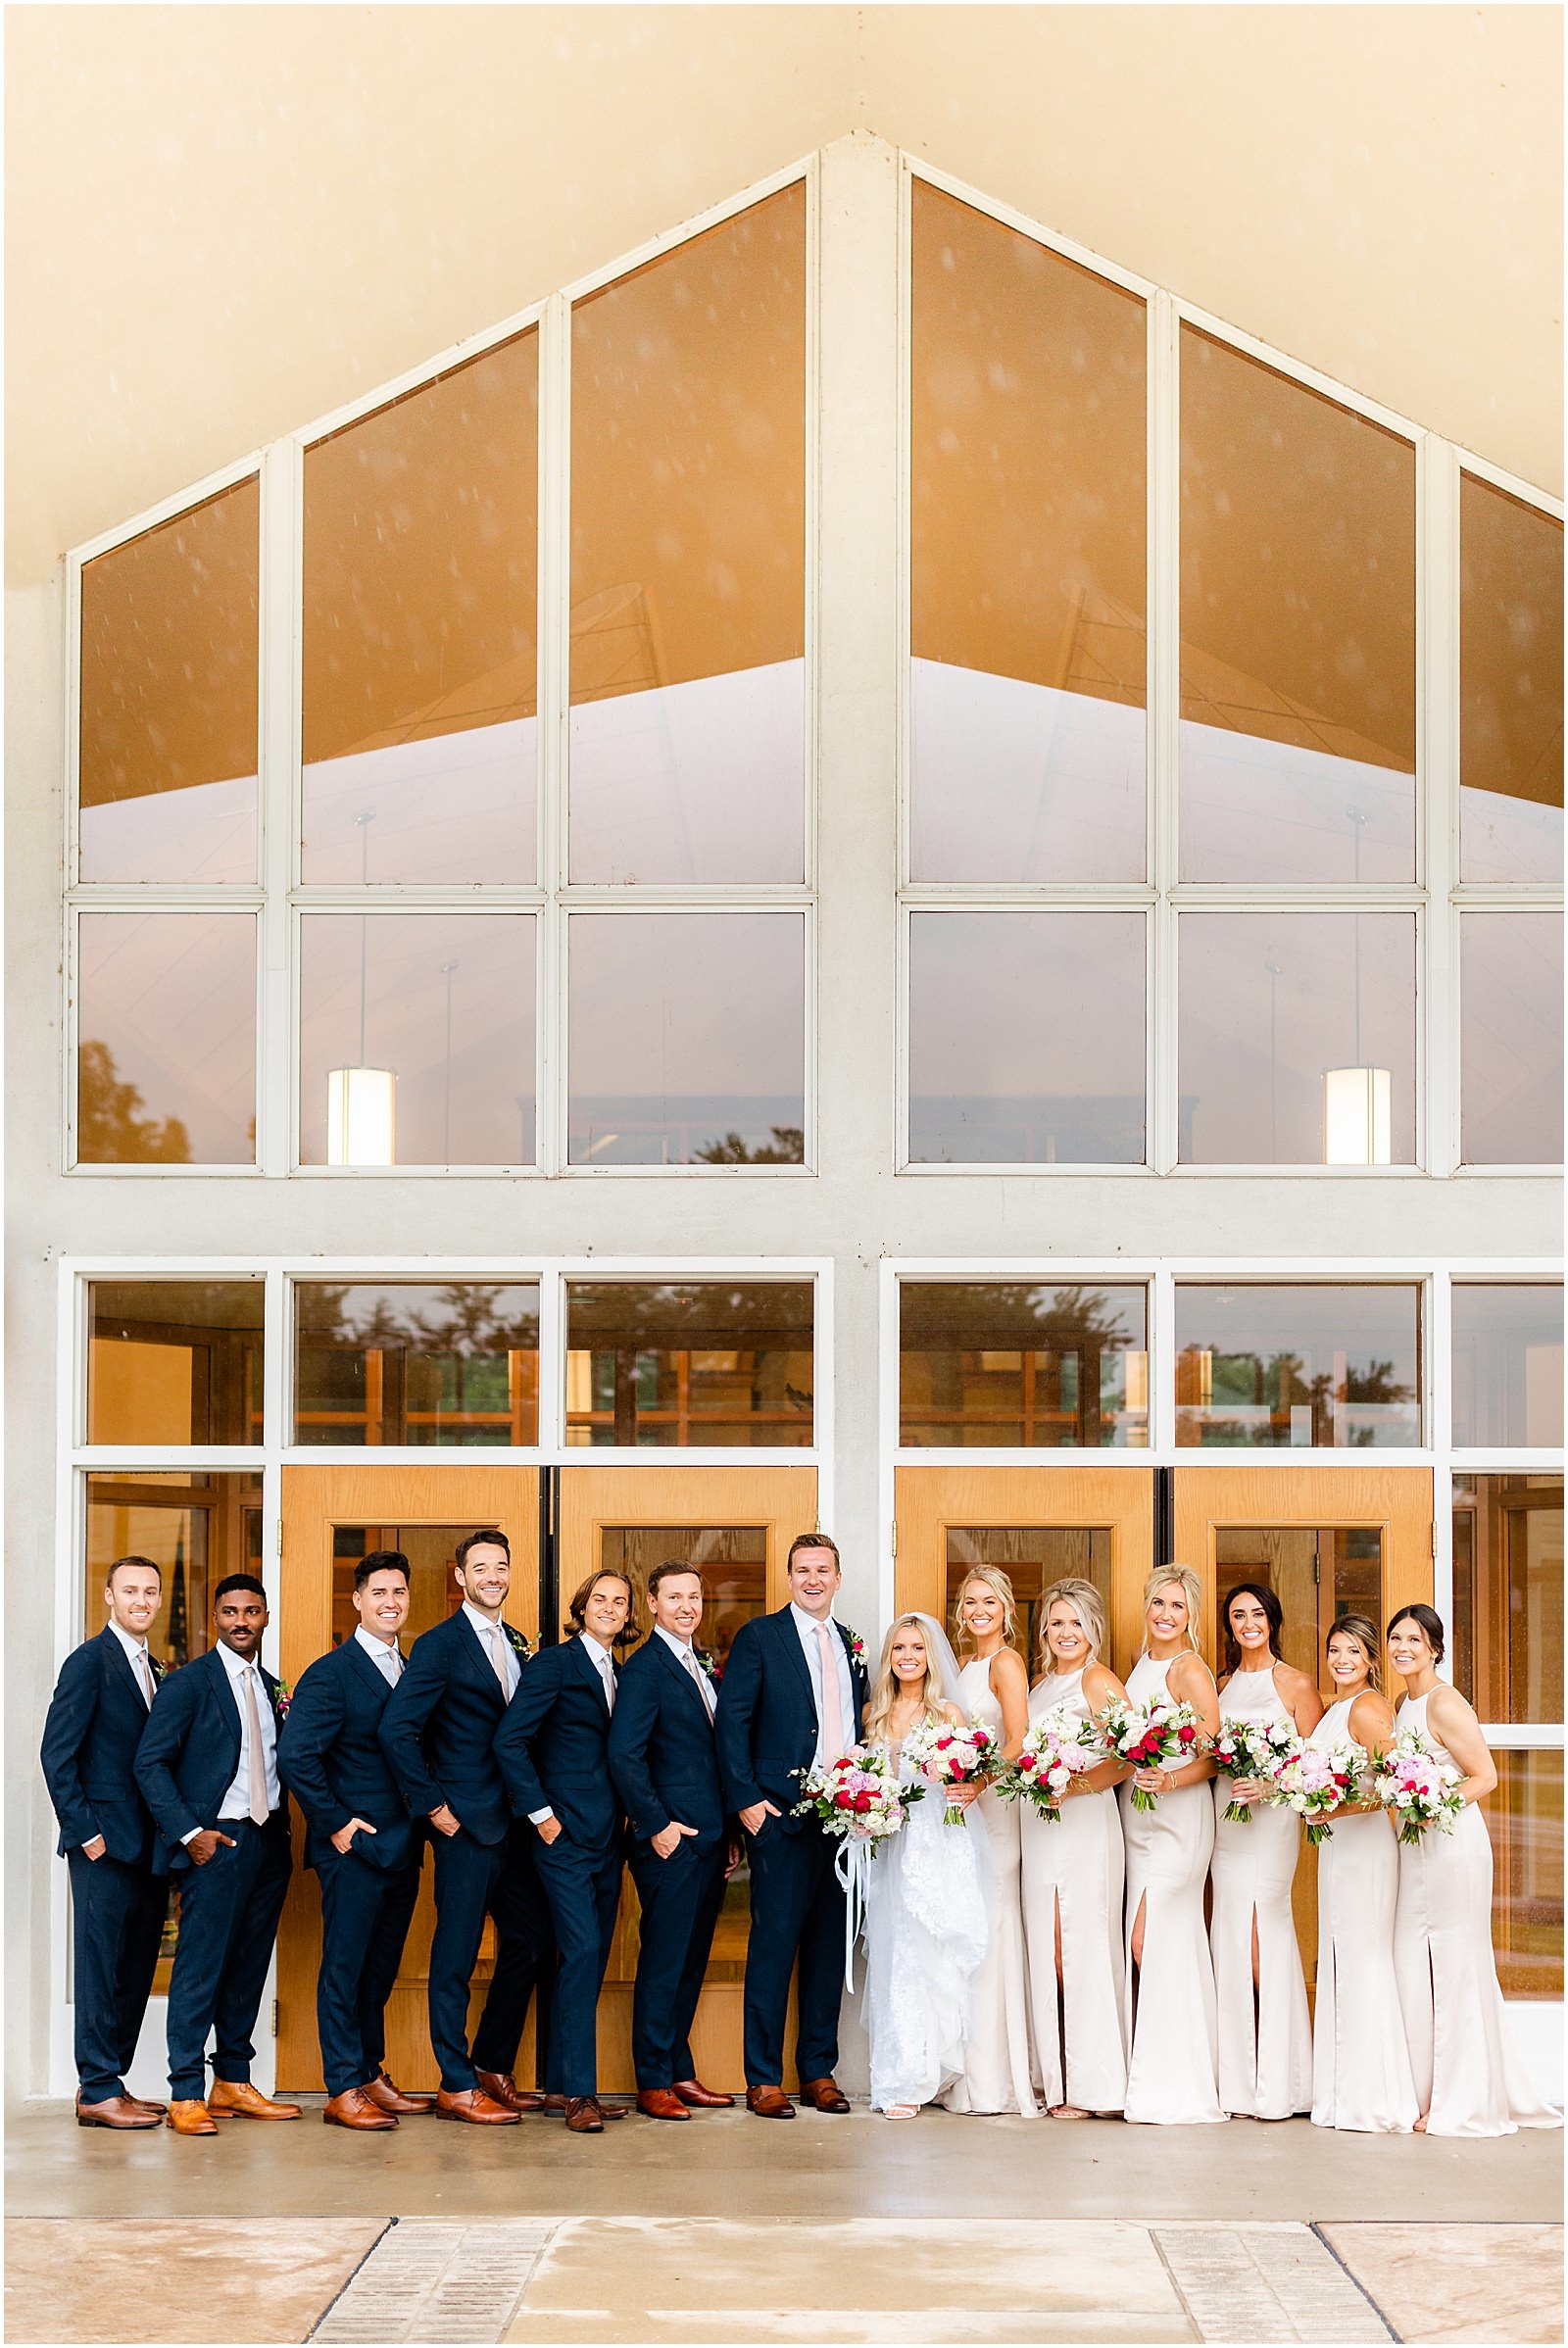 An Evansville Country Club Wedding | Madison and Christiaan | Bret and Brandie | Evansville Photographers | @bretandbrandie-0149.jpg